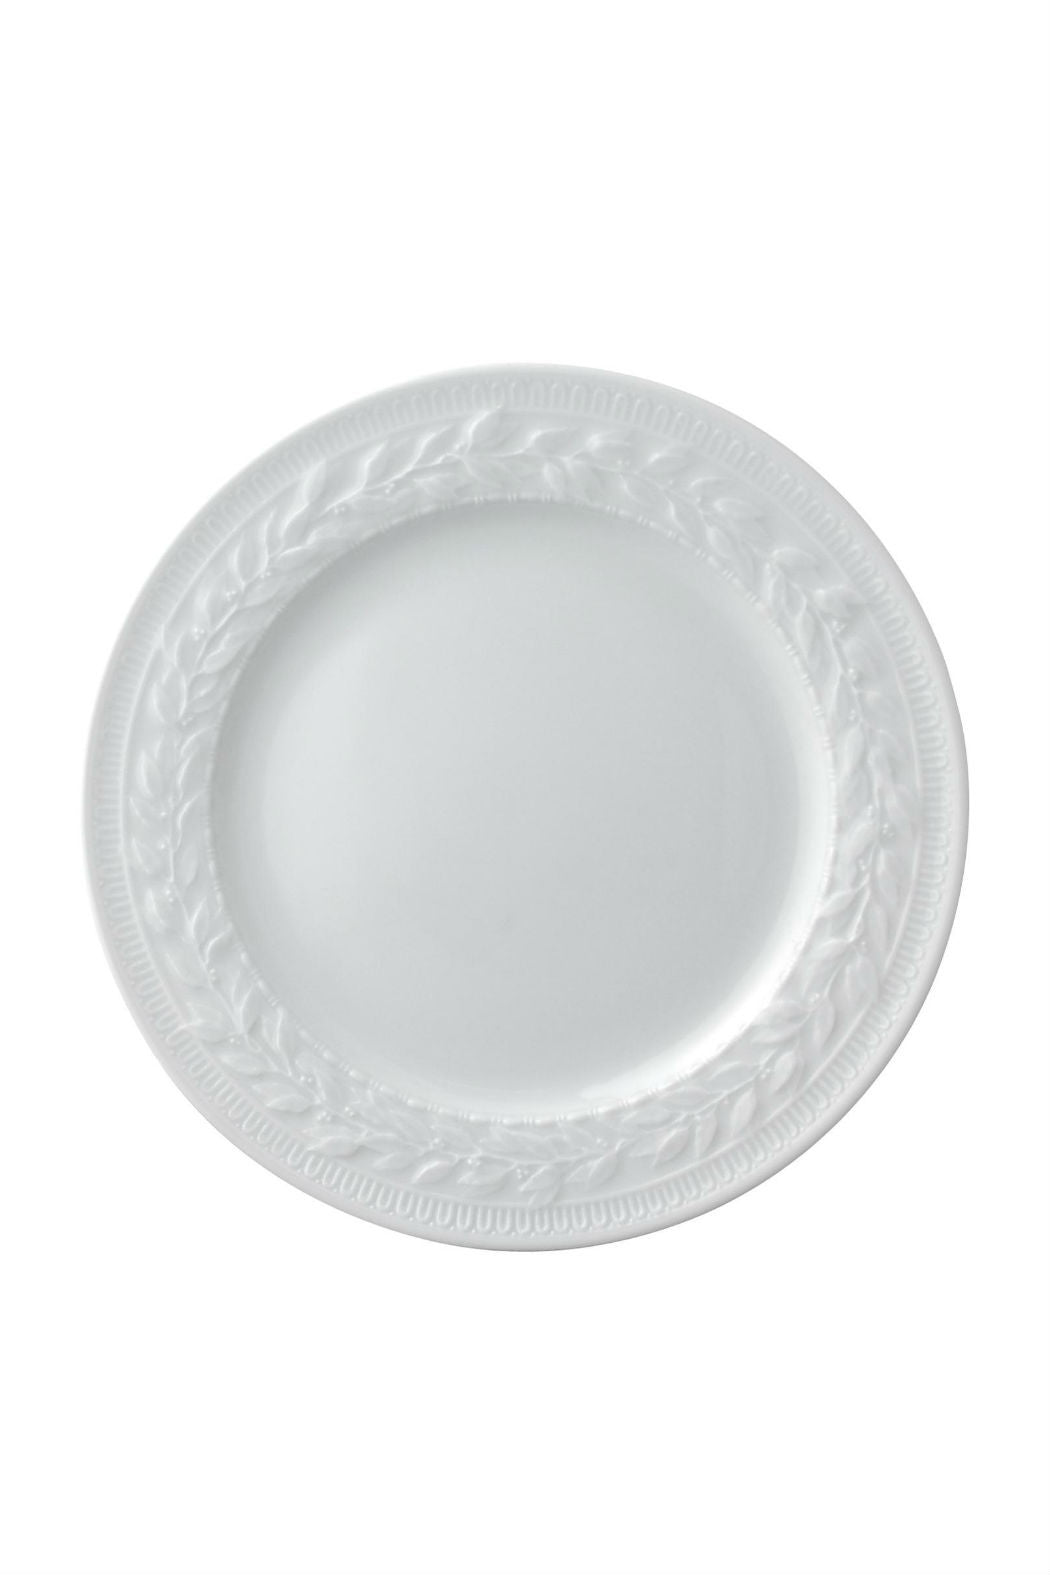 Bernardaud Louvre Salad Plate White Everyday Dishes - New Orientation